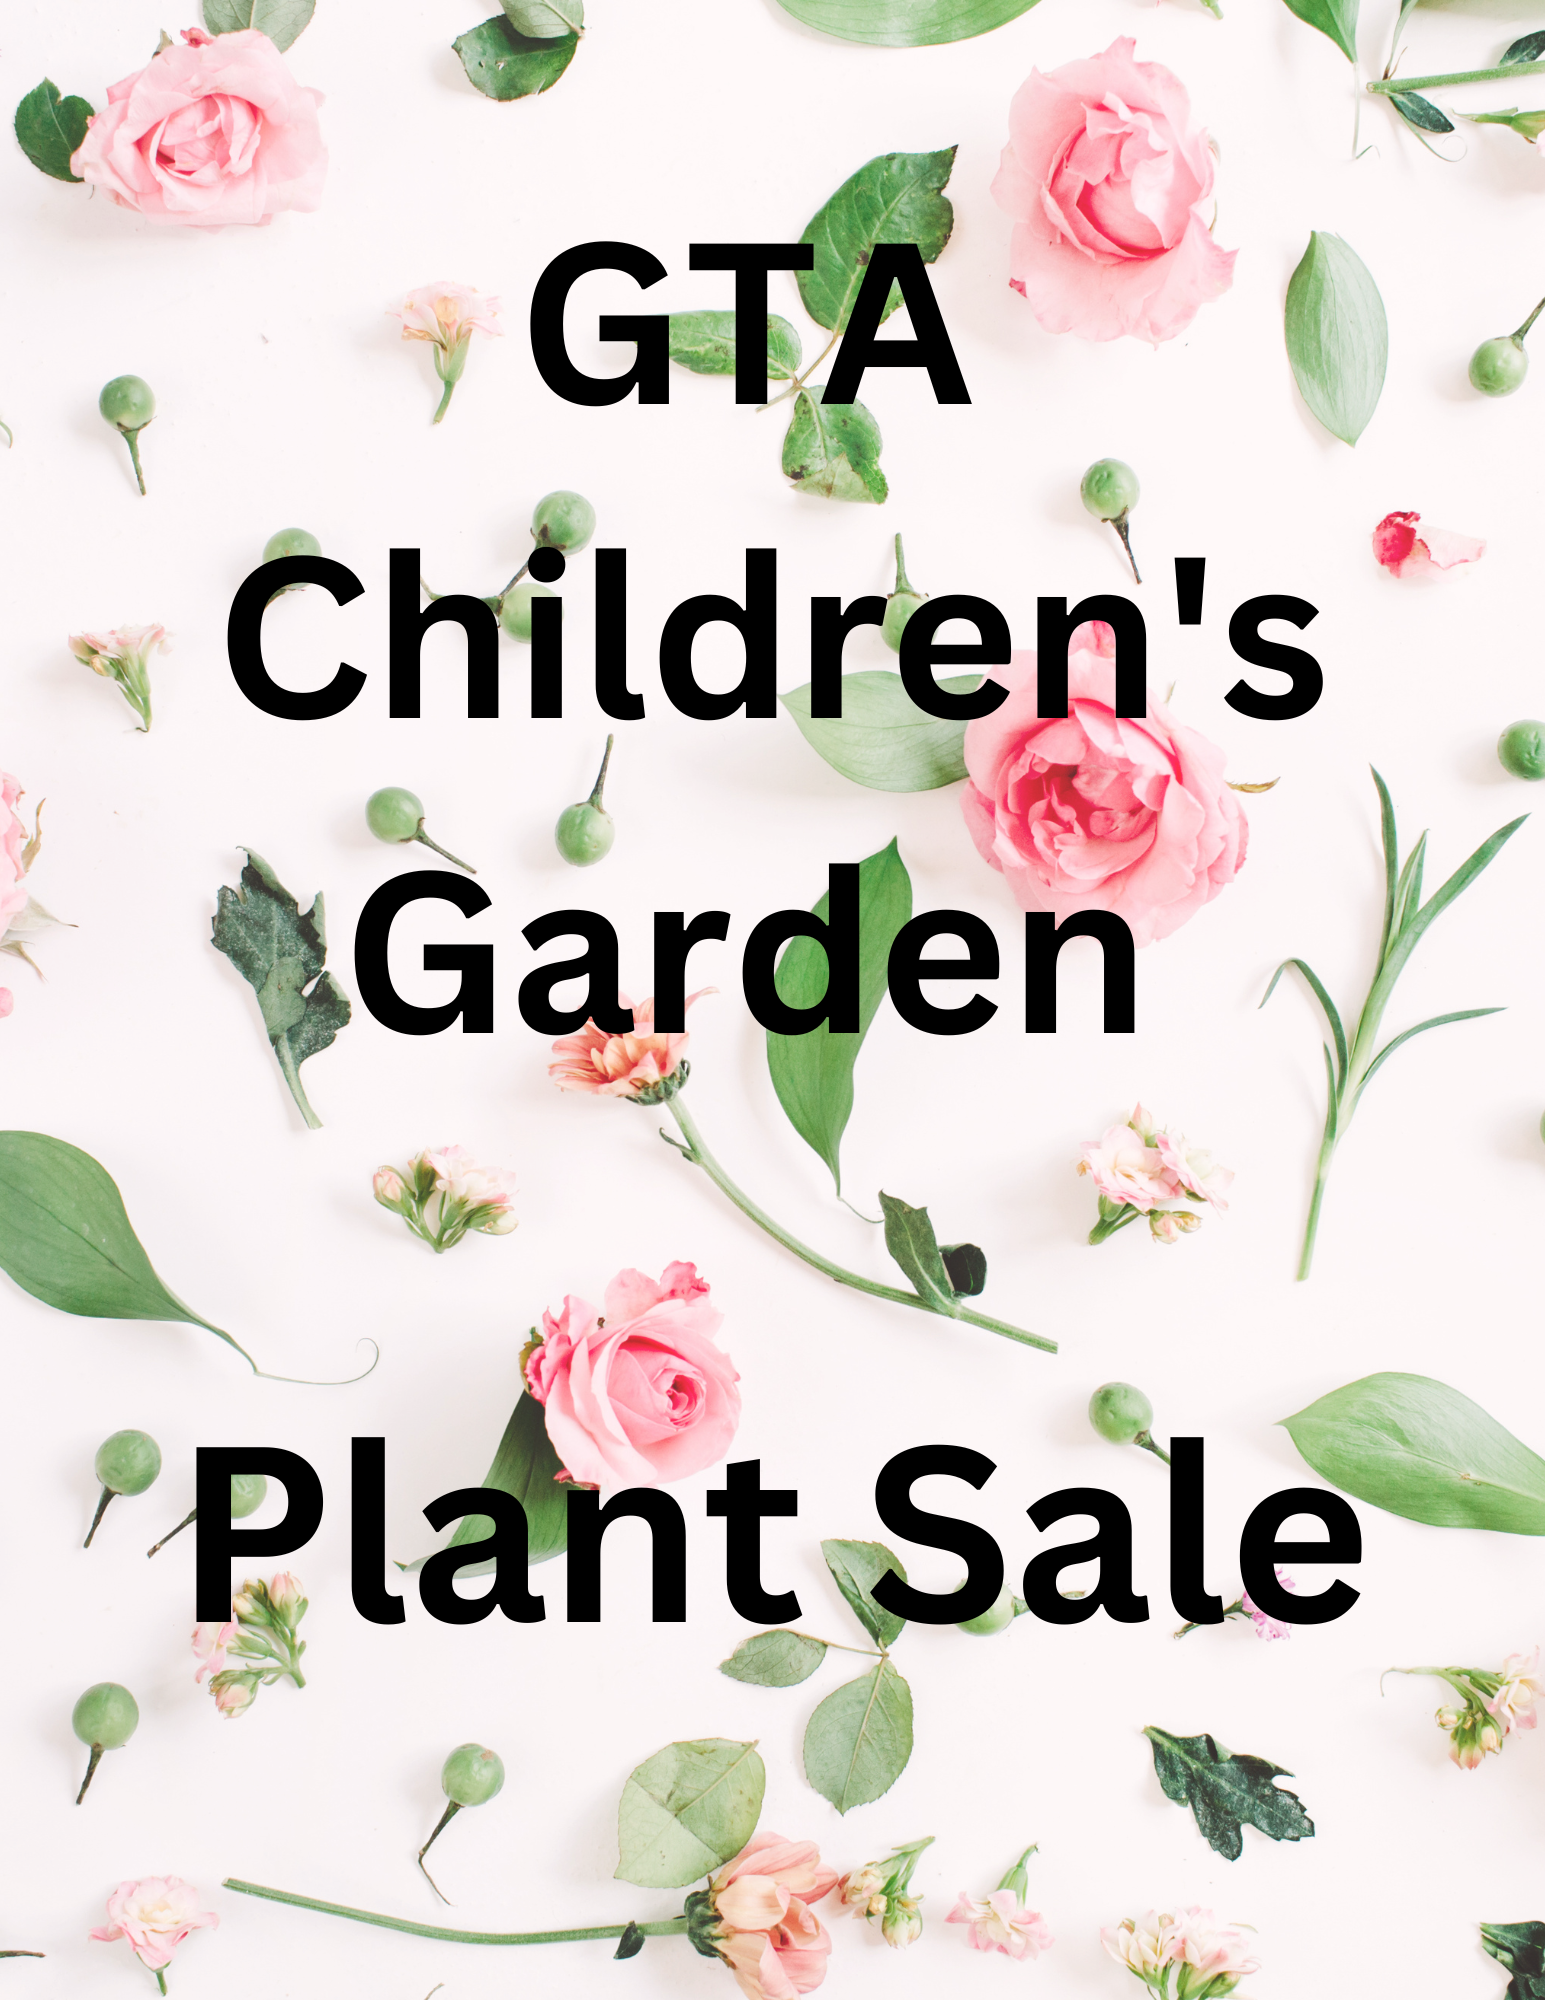 GTA Plant Sale